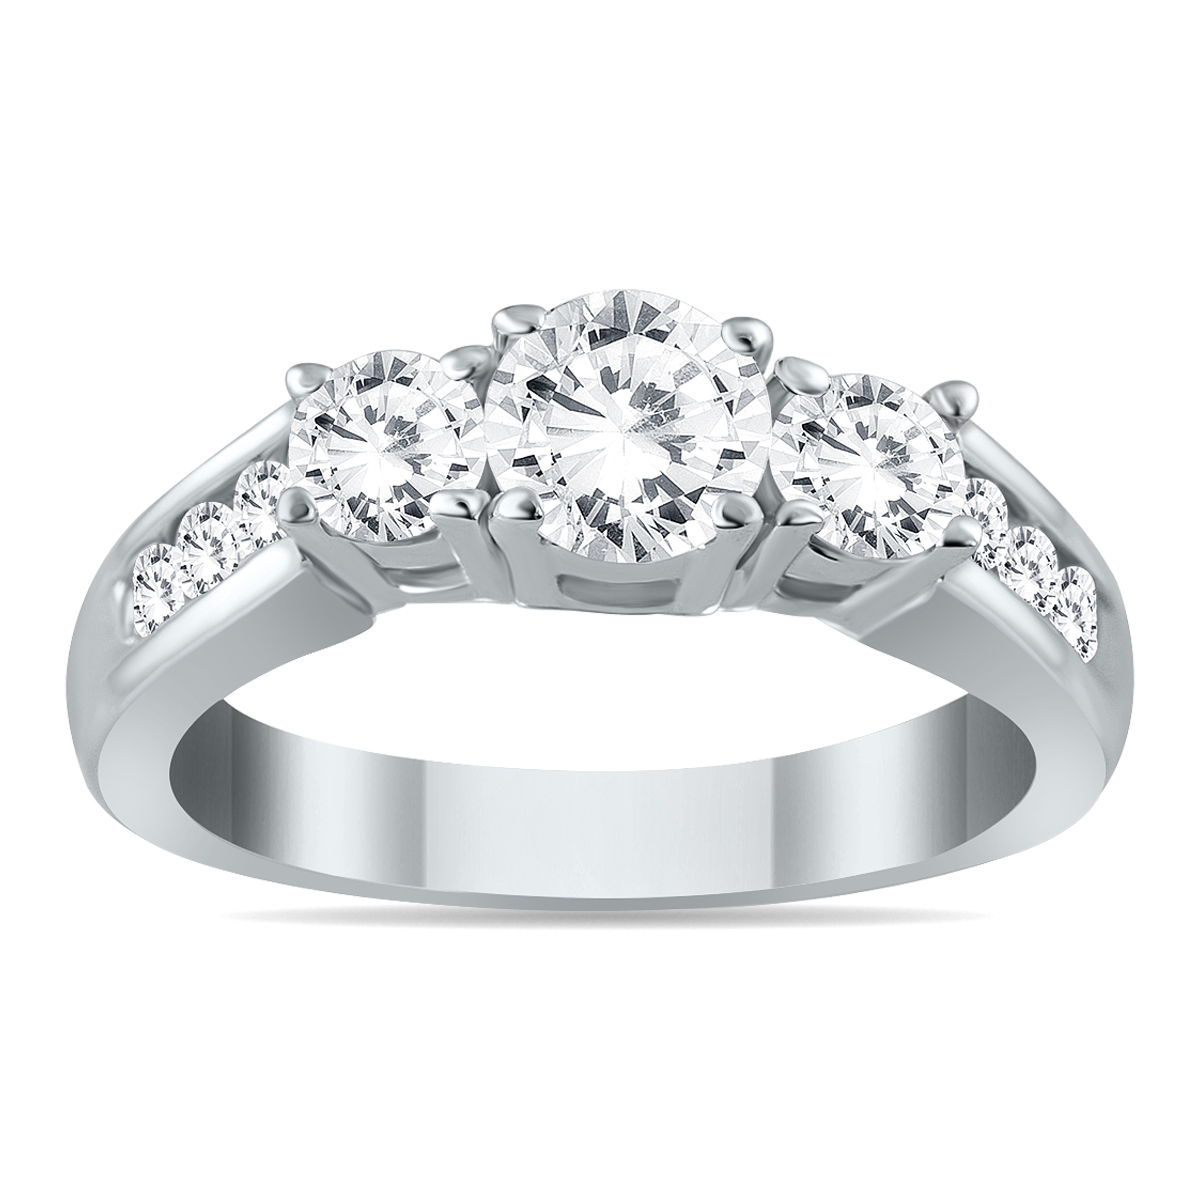 1 1/2 Carat TW Diamond Three Stone Ring in 10K White Gold